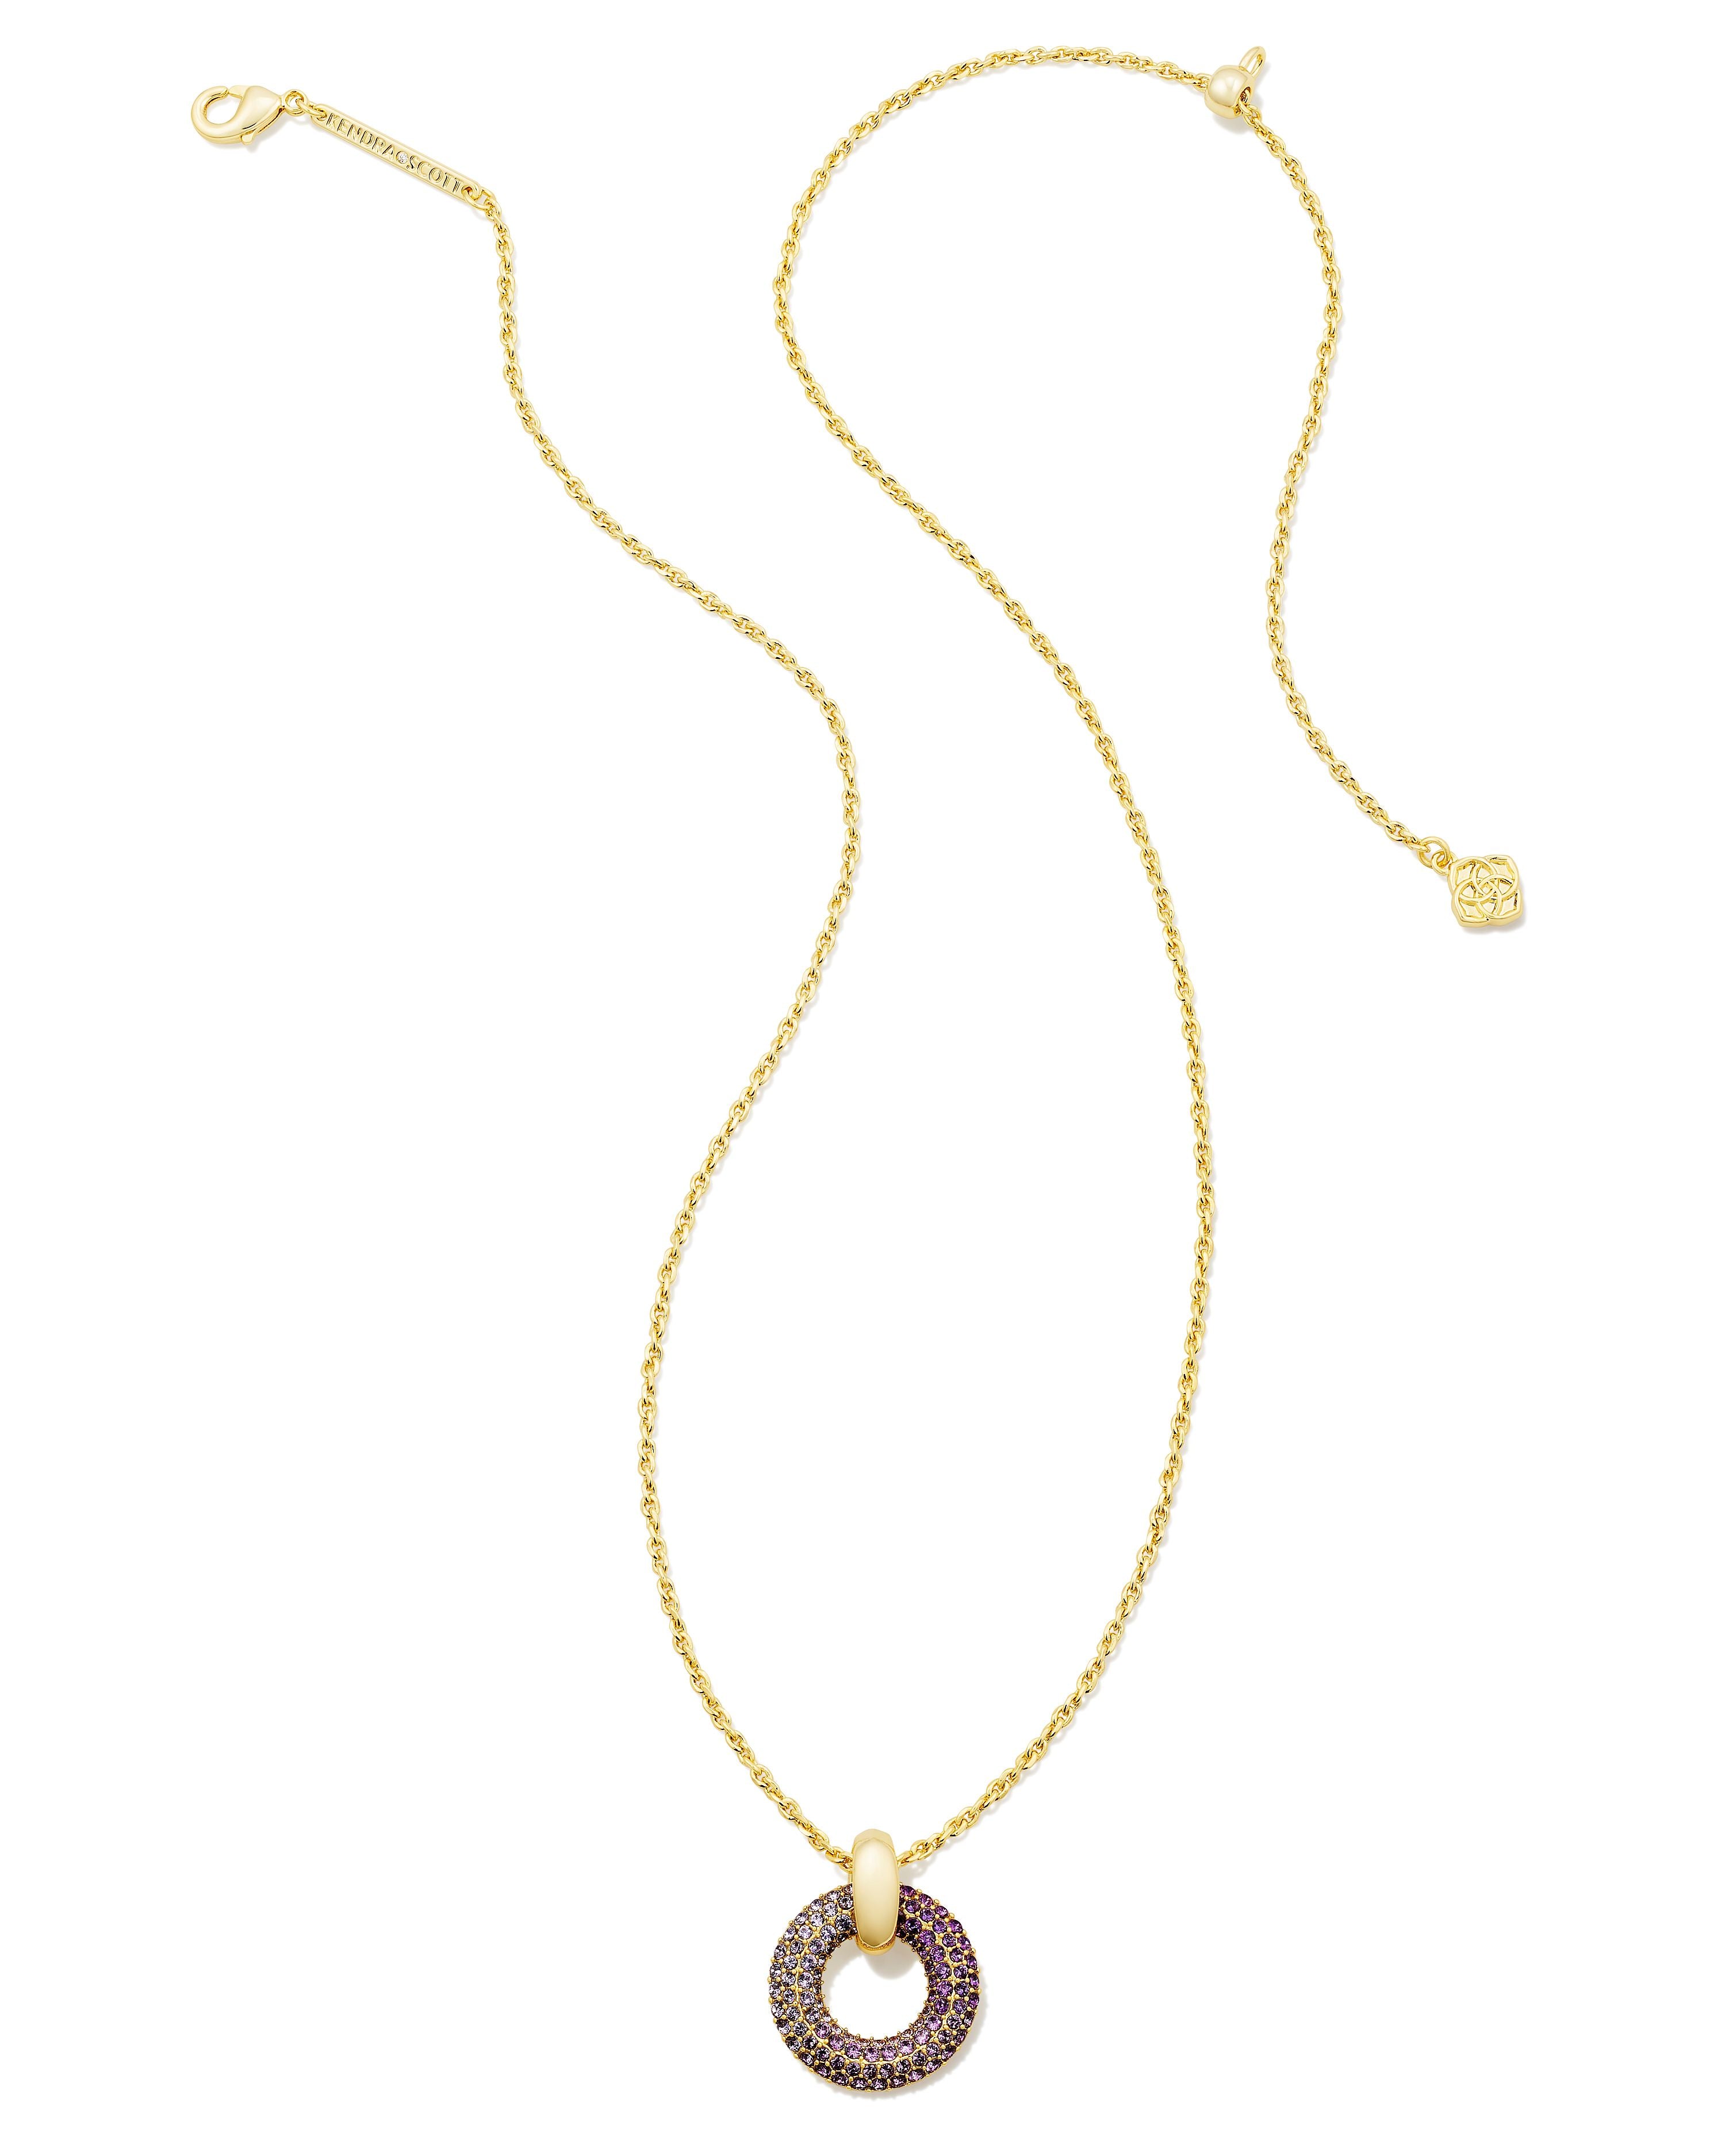 Kendra Scott Mikki Pendant Necklace in Purple Mauve Ombre Mix and Gold